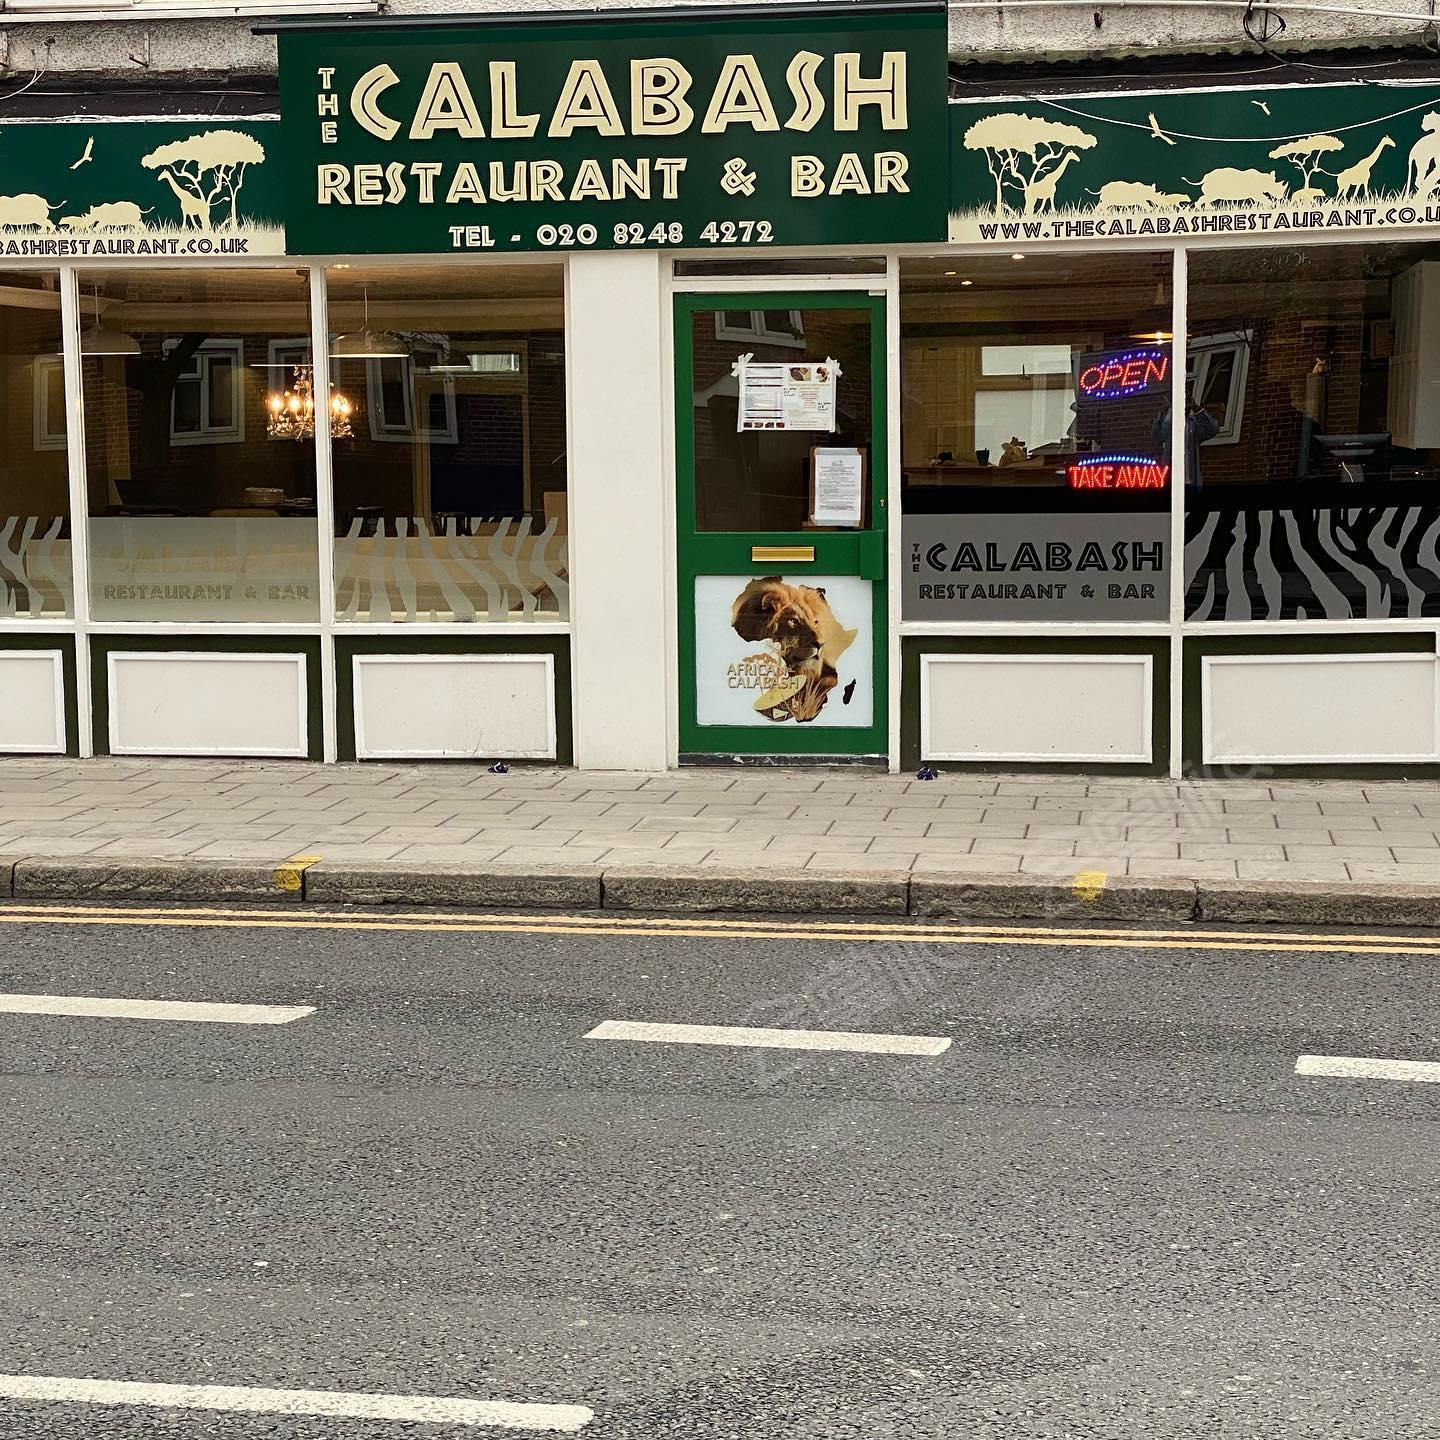 Calabash Restaurant & Bar